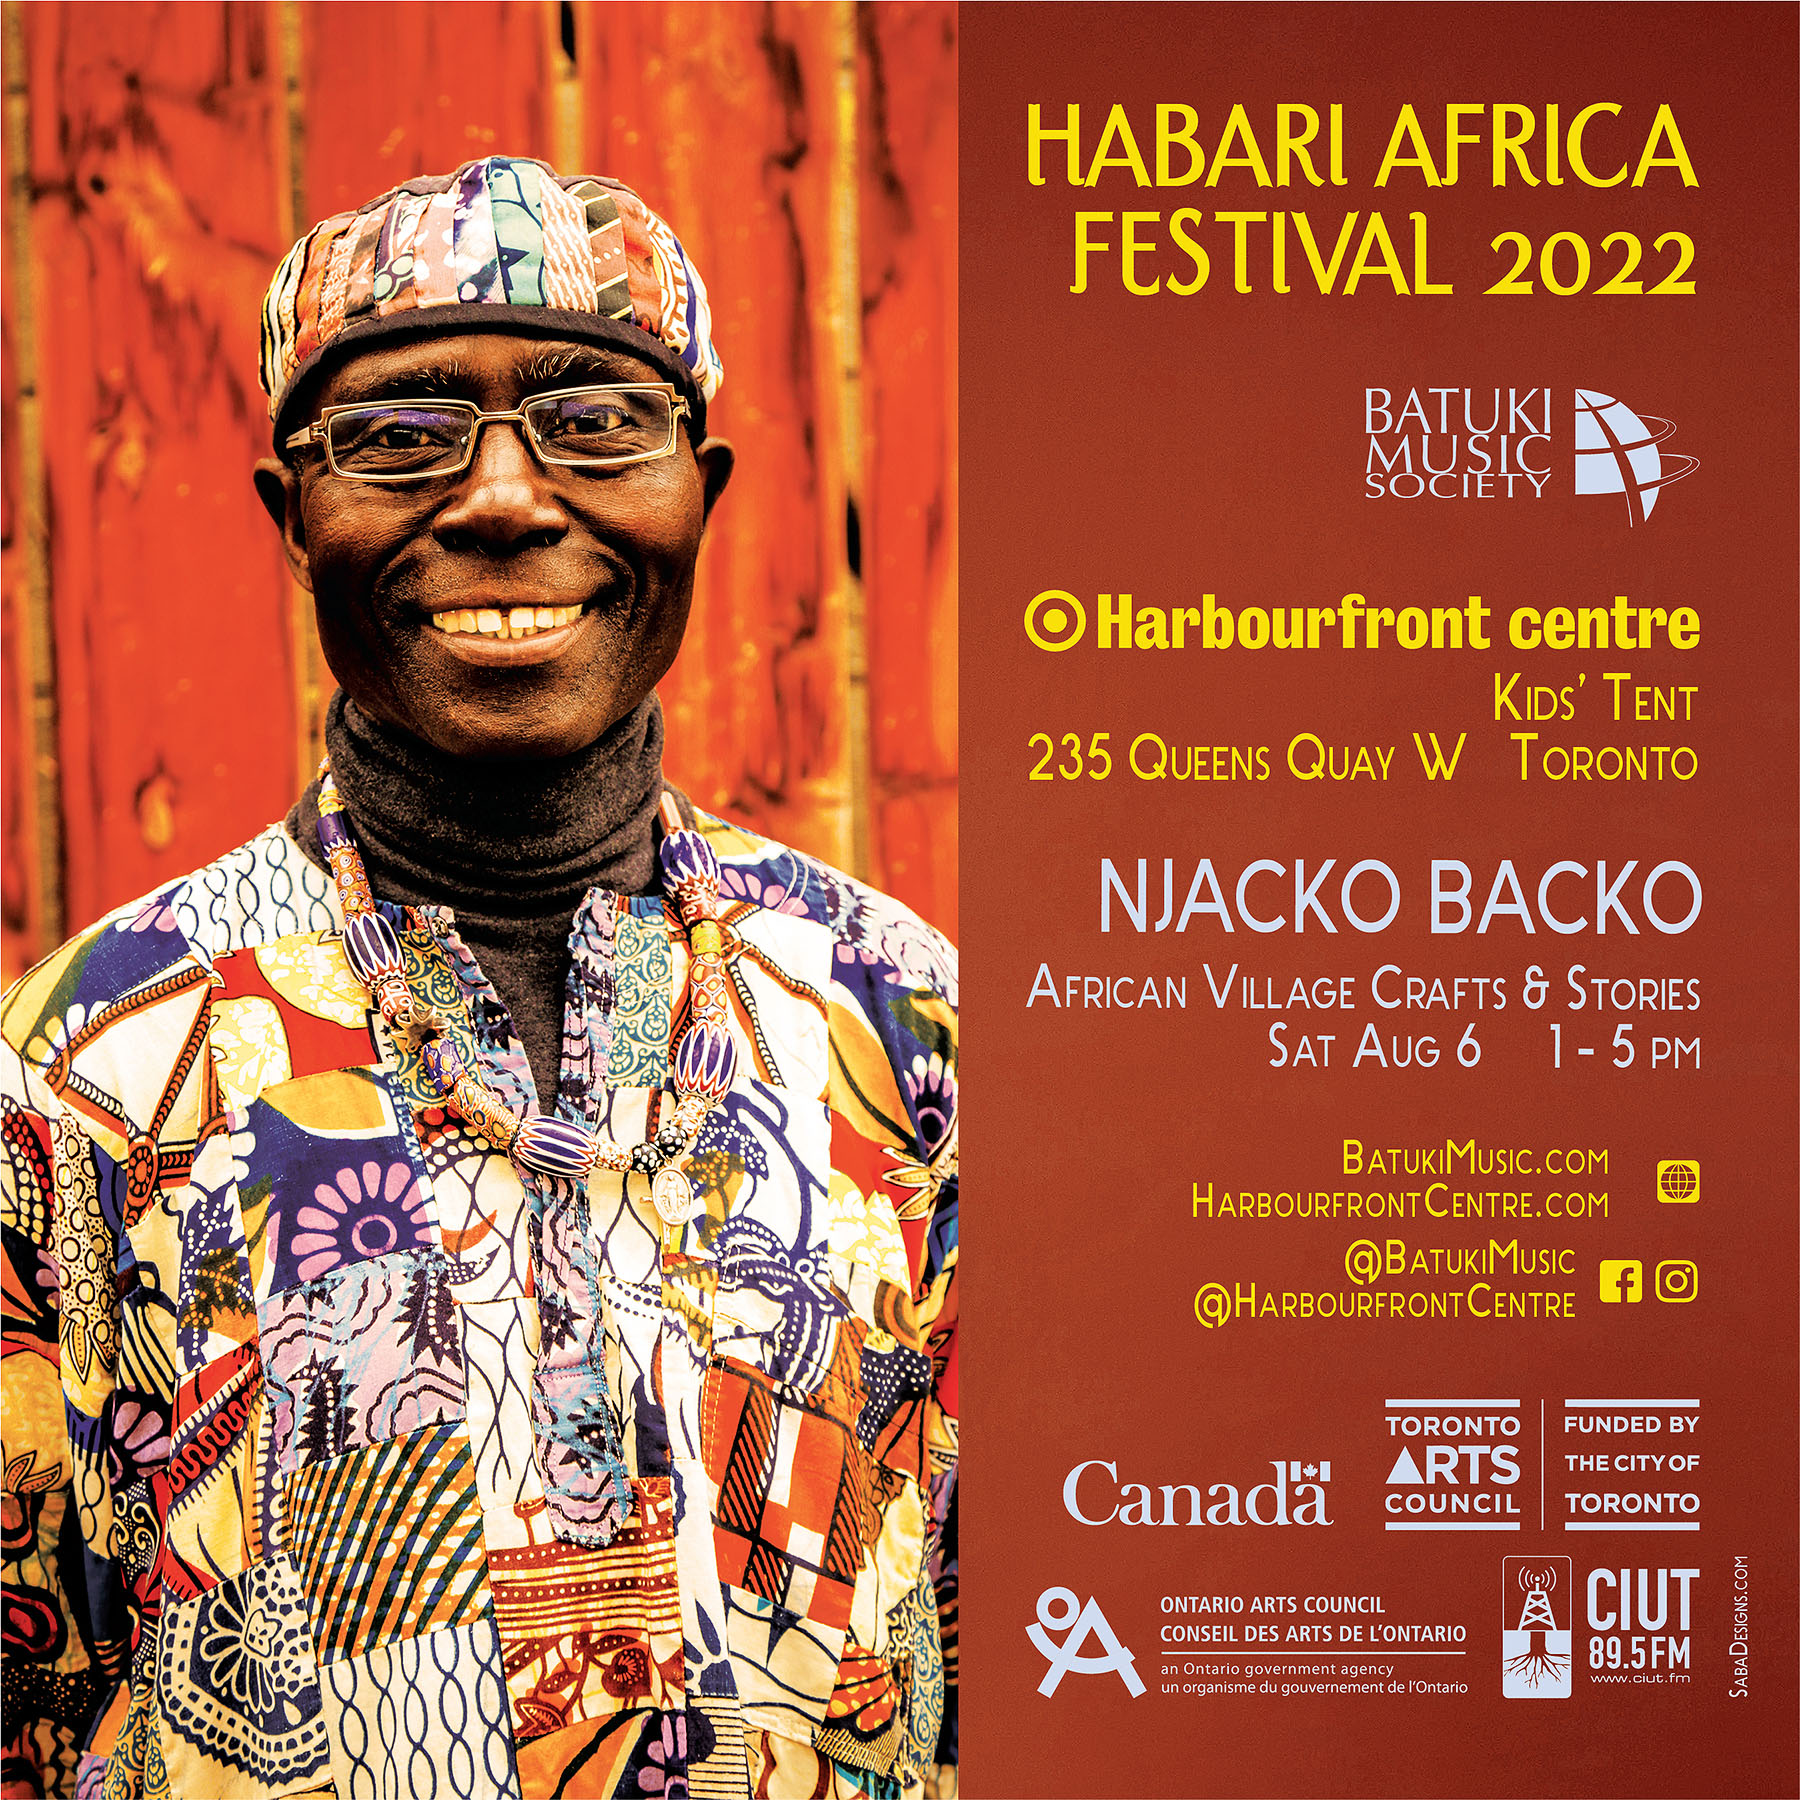 Habari Africa Live Festival 2022 by Batuki Music Society Njacko Backo